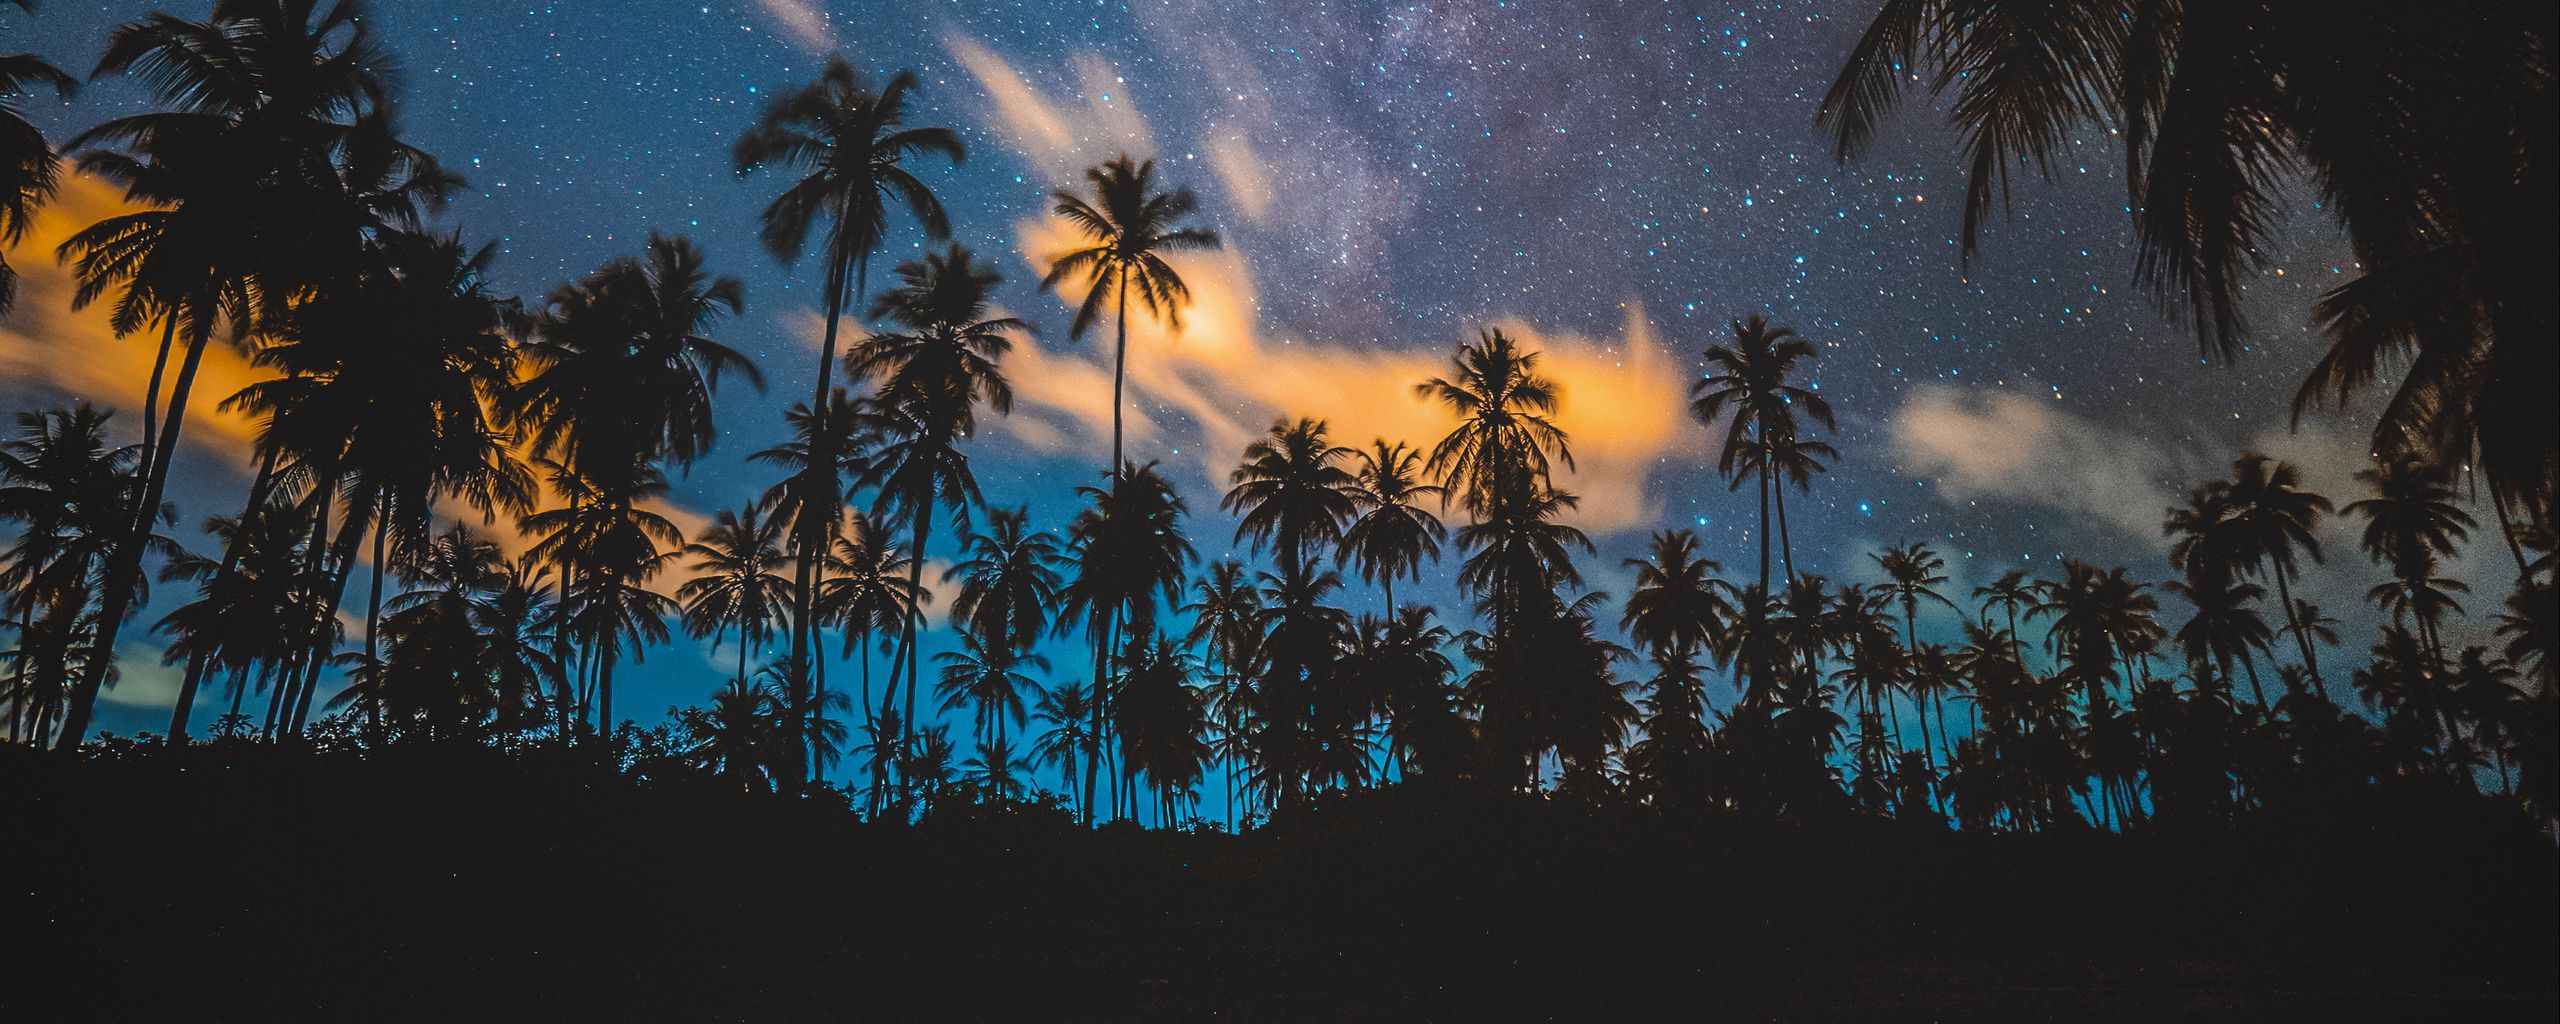 Wallpaper Palm Trees Starry Sky Milky Way